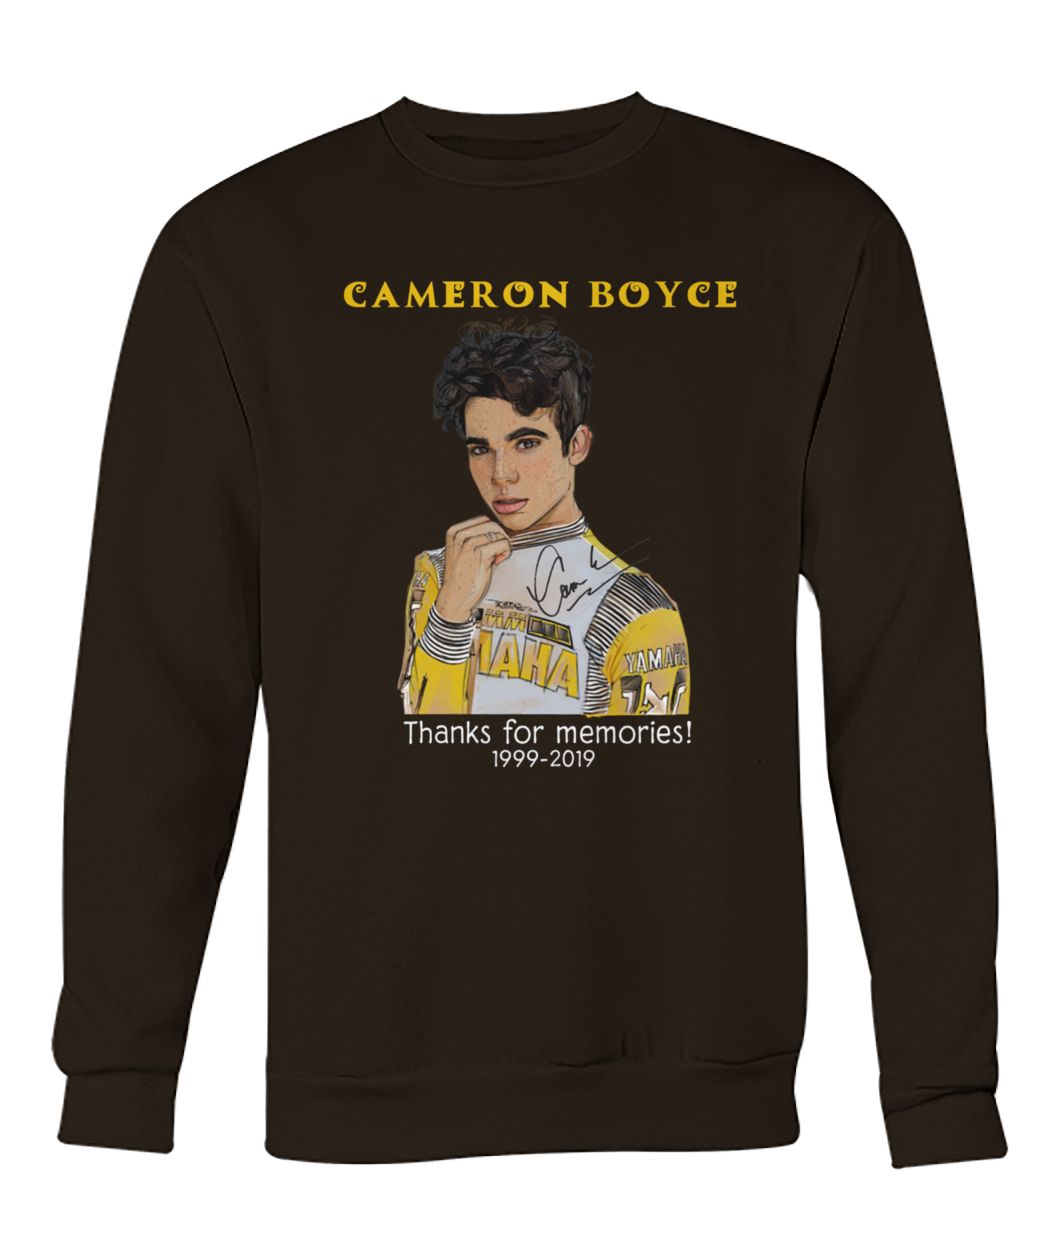 Cameron boyce thanks for memories 1999-2019 crew neck sweatshirt